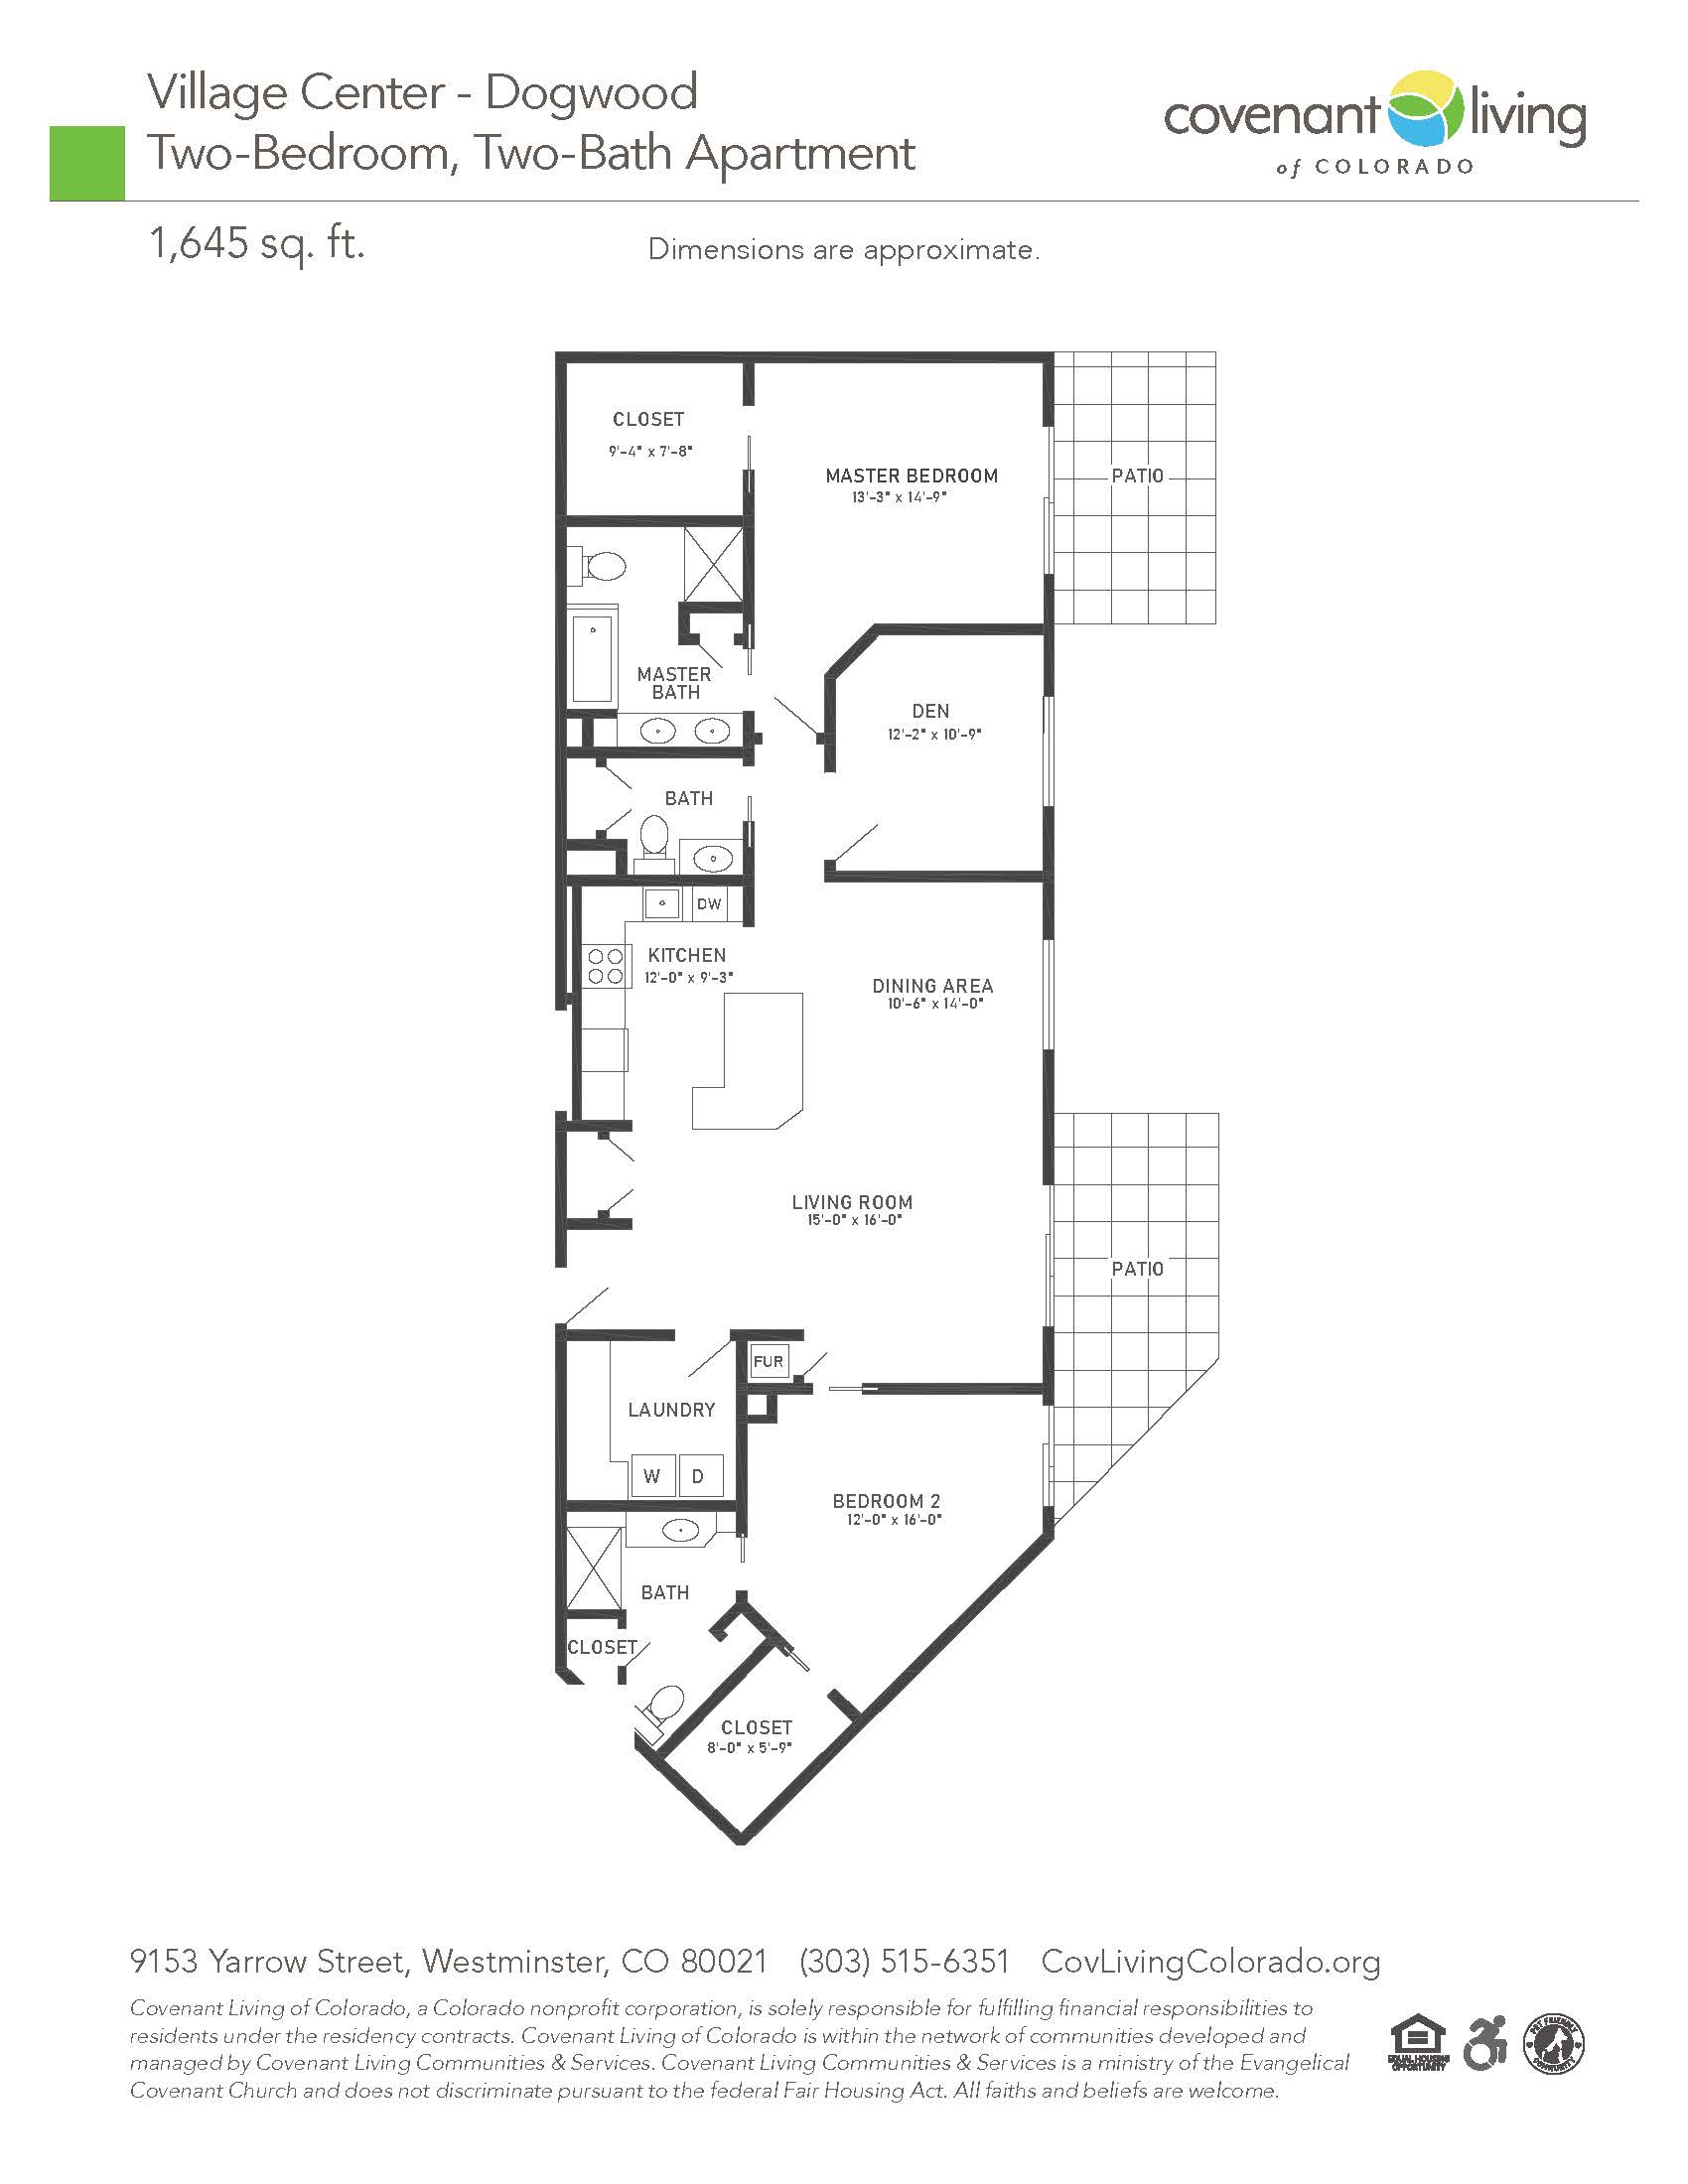 Dogwood 2 bed floor plan